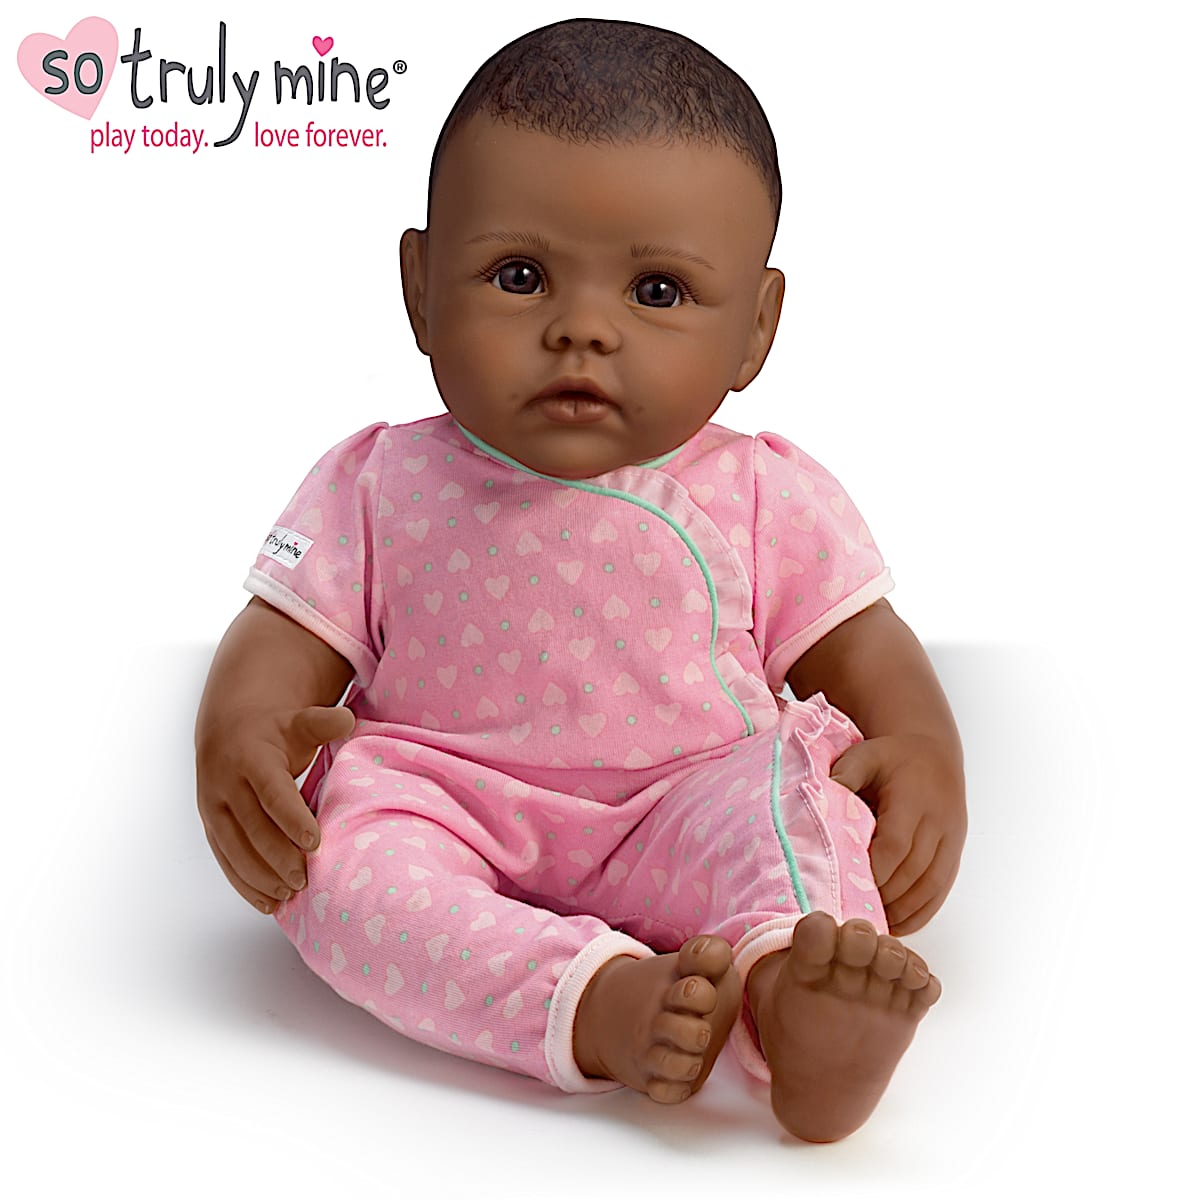 Cute black baby girl in gold ruffle diaper Vector Image